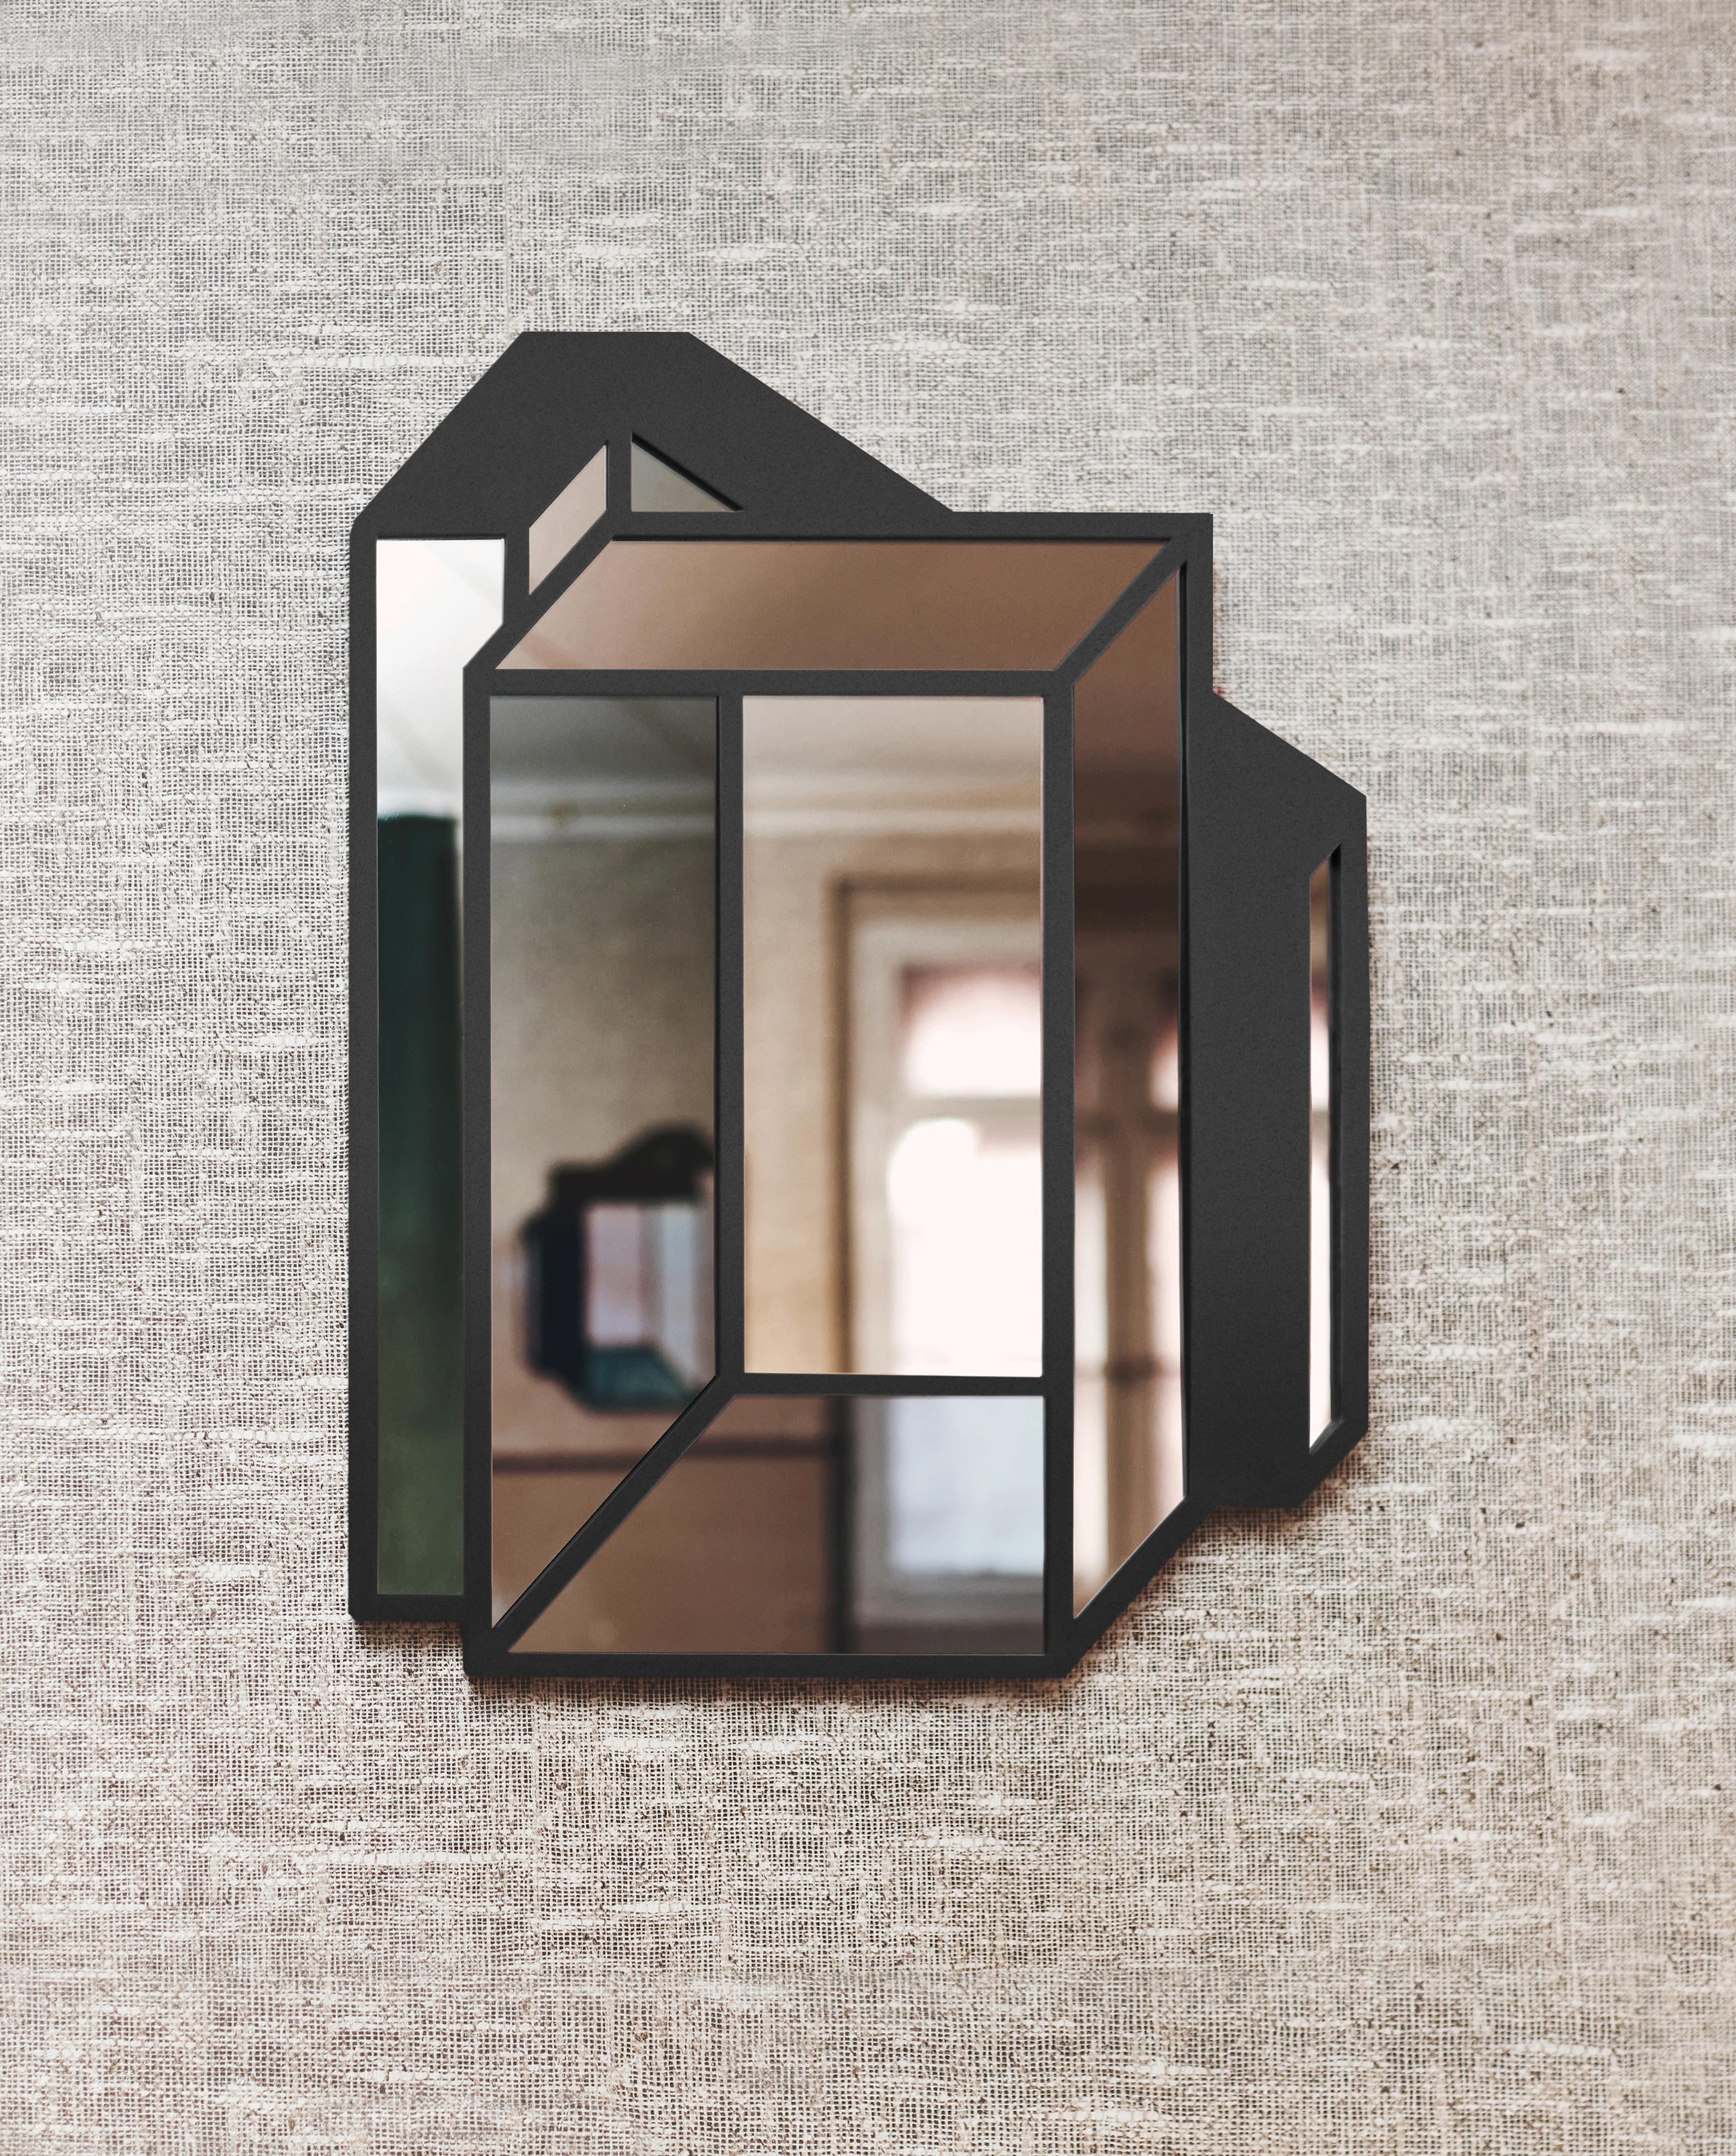 Other Mirror Object No.1 by Dechem Studio